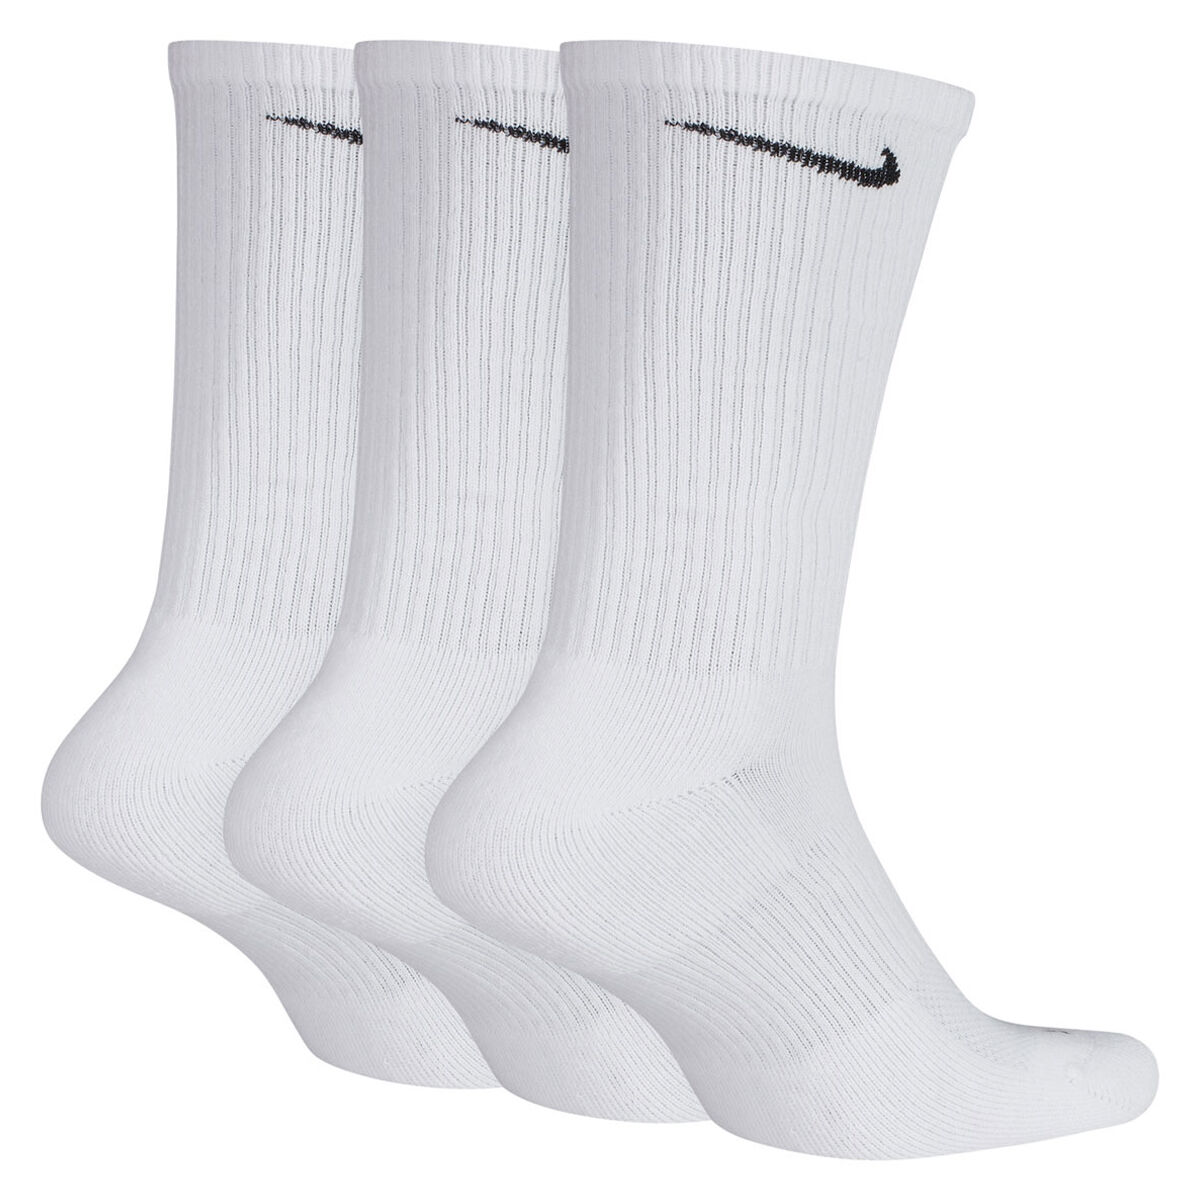 Nike Mens Cushion Crew 3 Pack Socks 